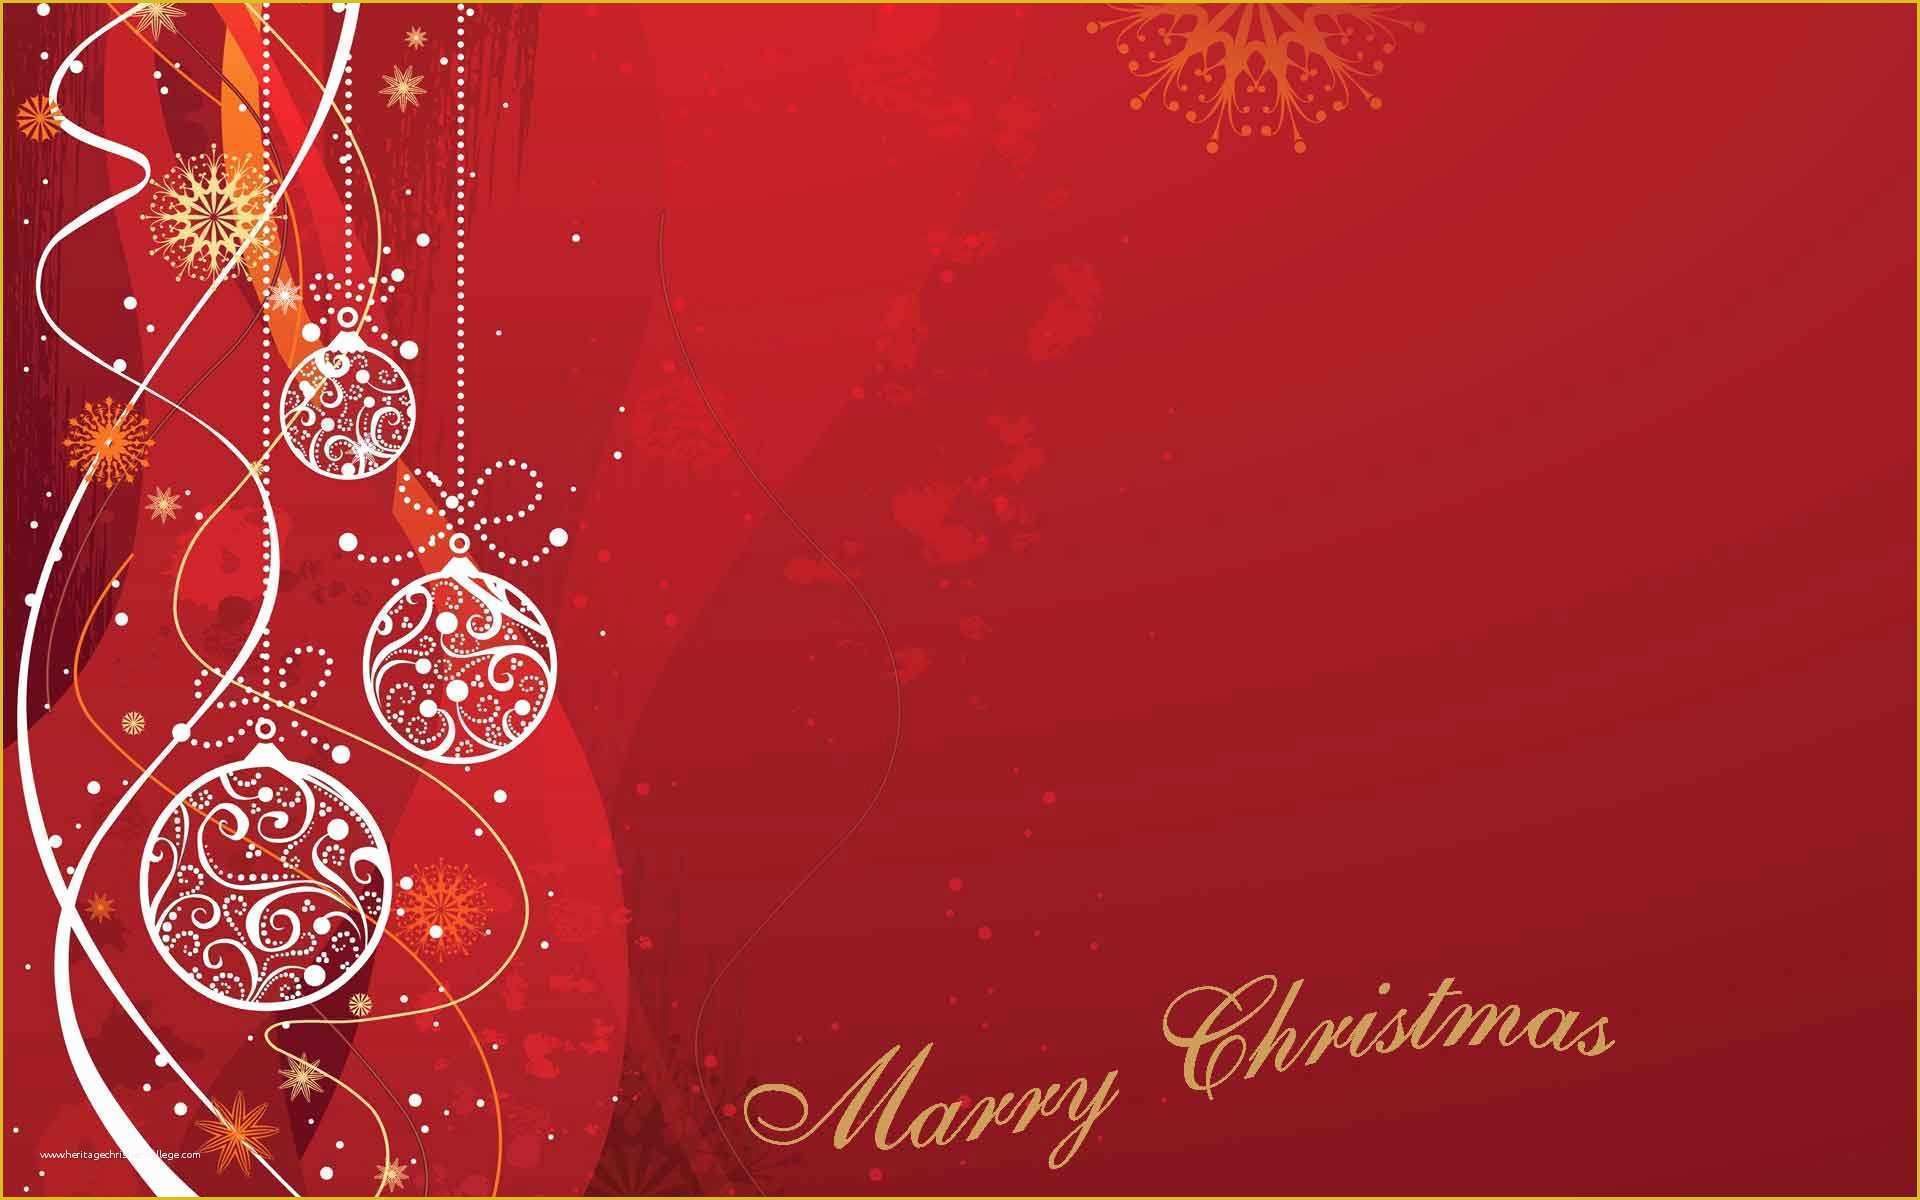 E Christmas Card Templates Free Of Free Christmas Card Templates for Email – Fun for